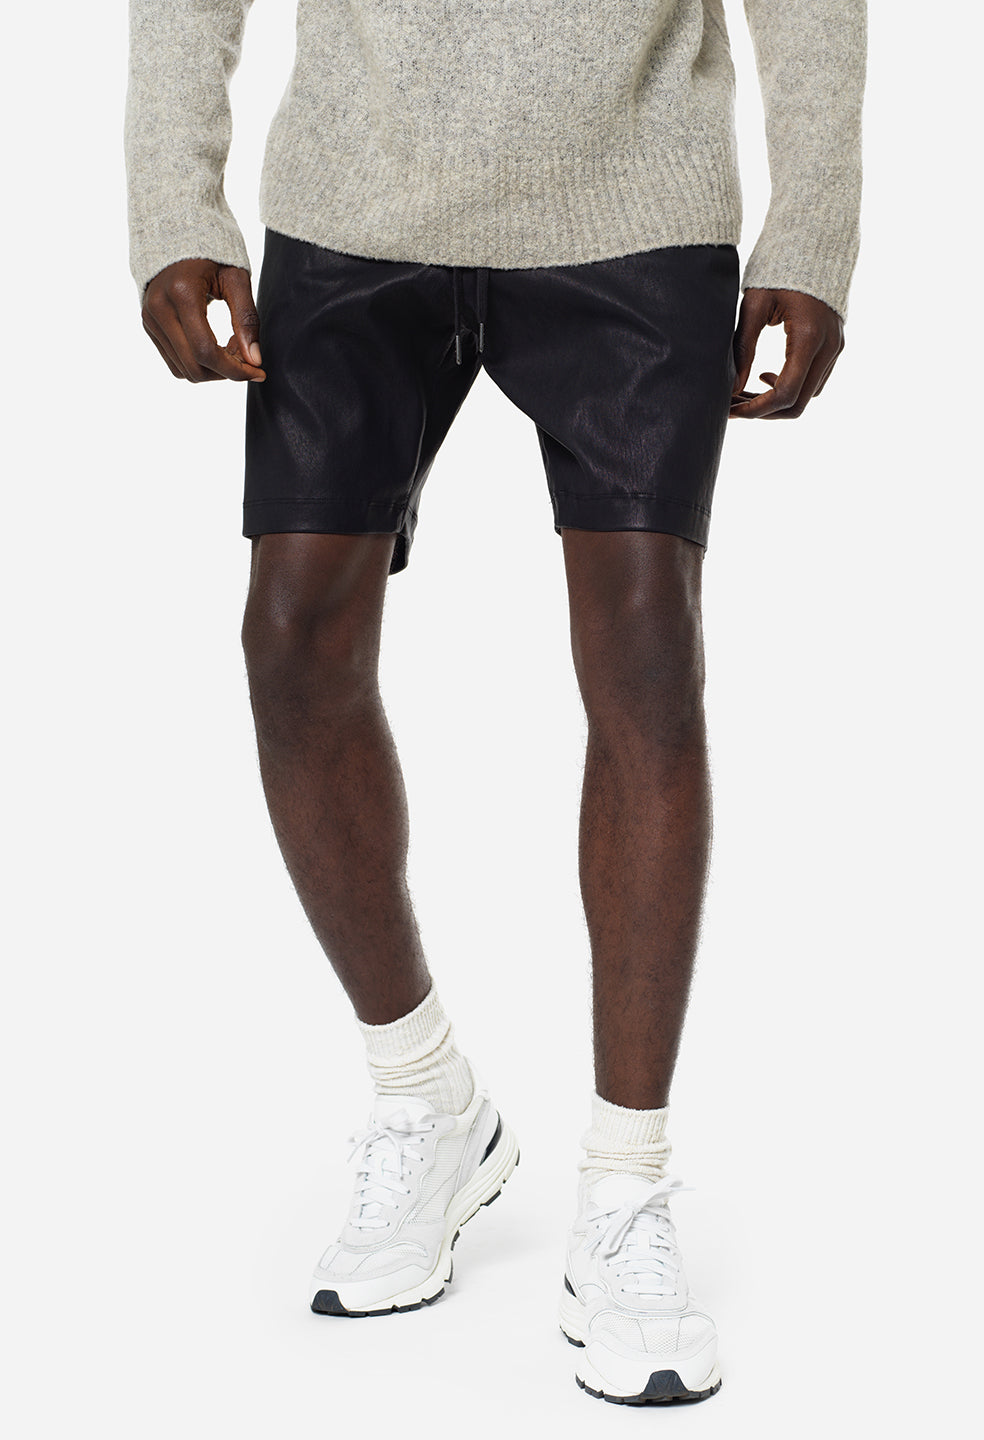 00's Black and White Elephant Leather Shorts – OPTIONS